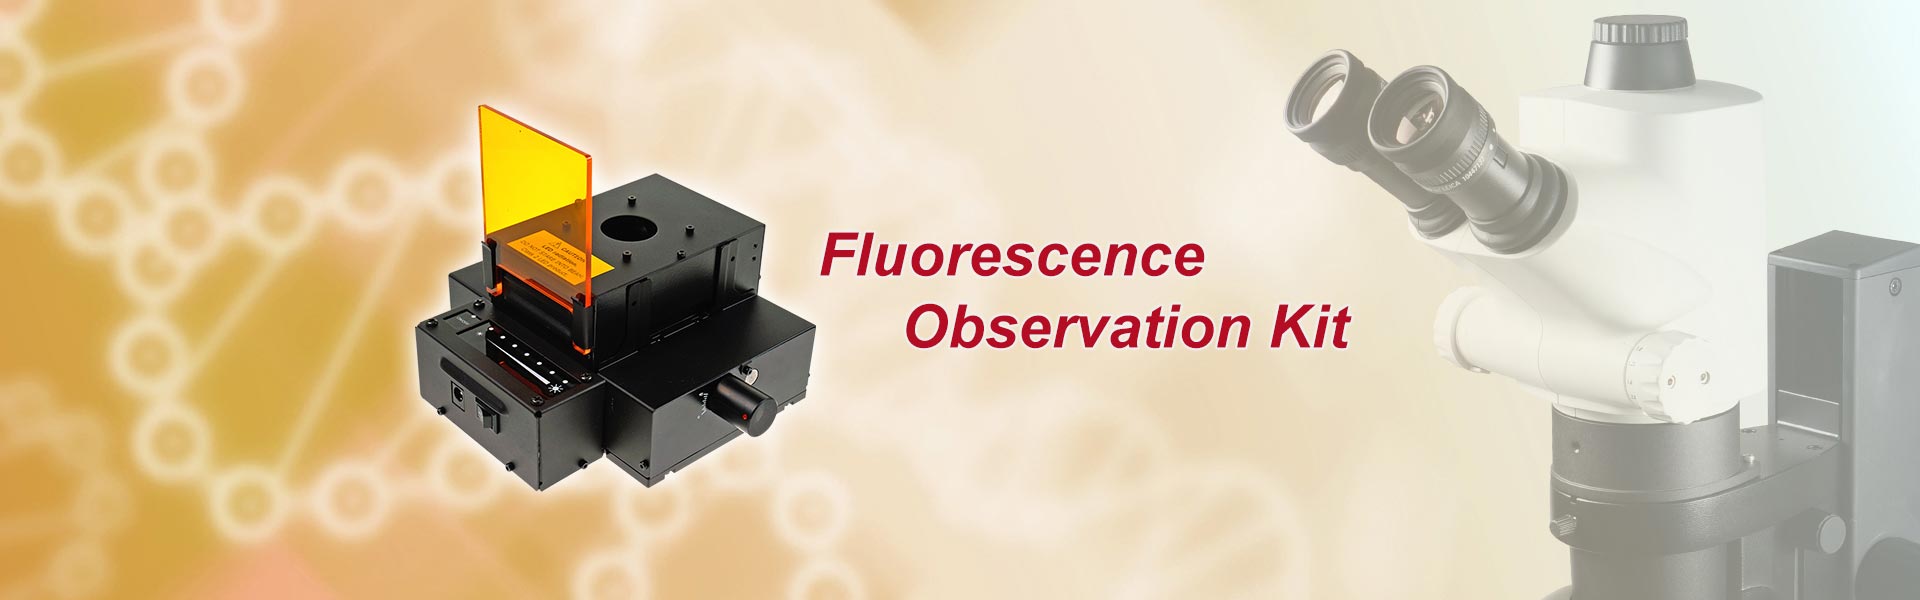 Fluorescence Observation